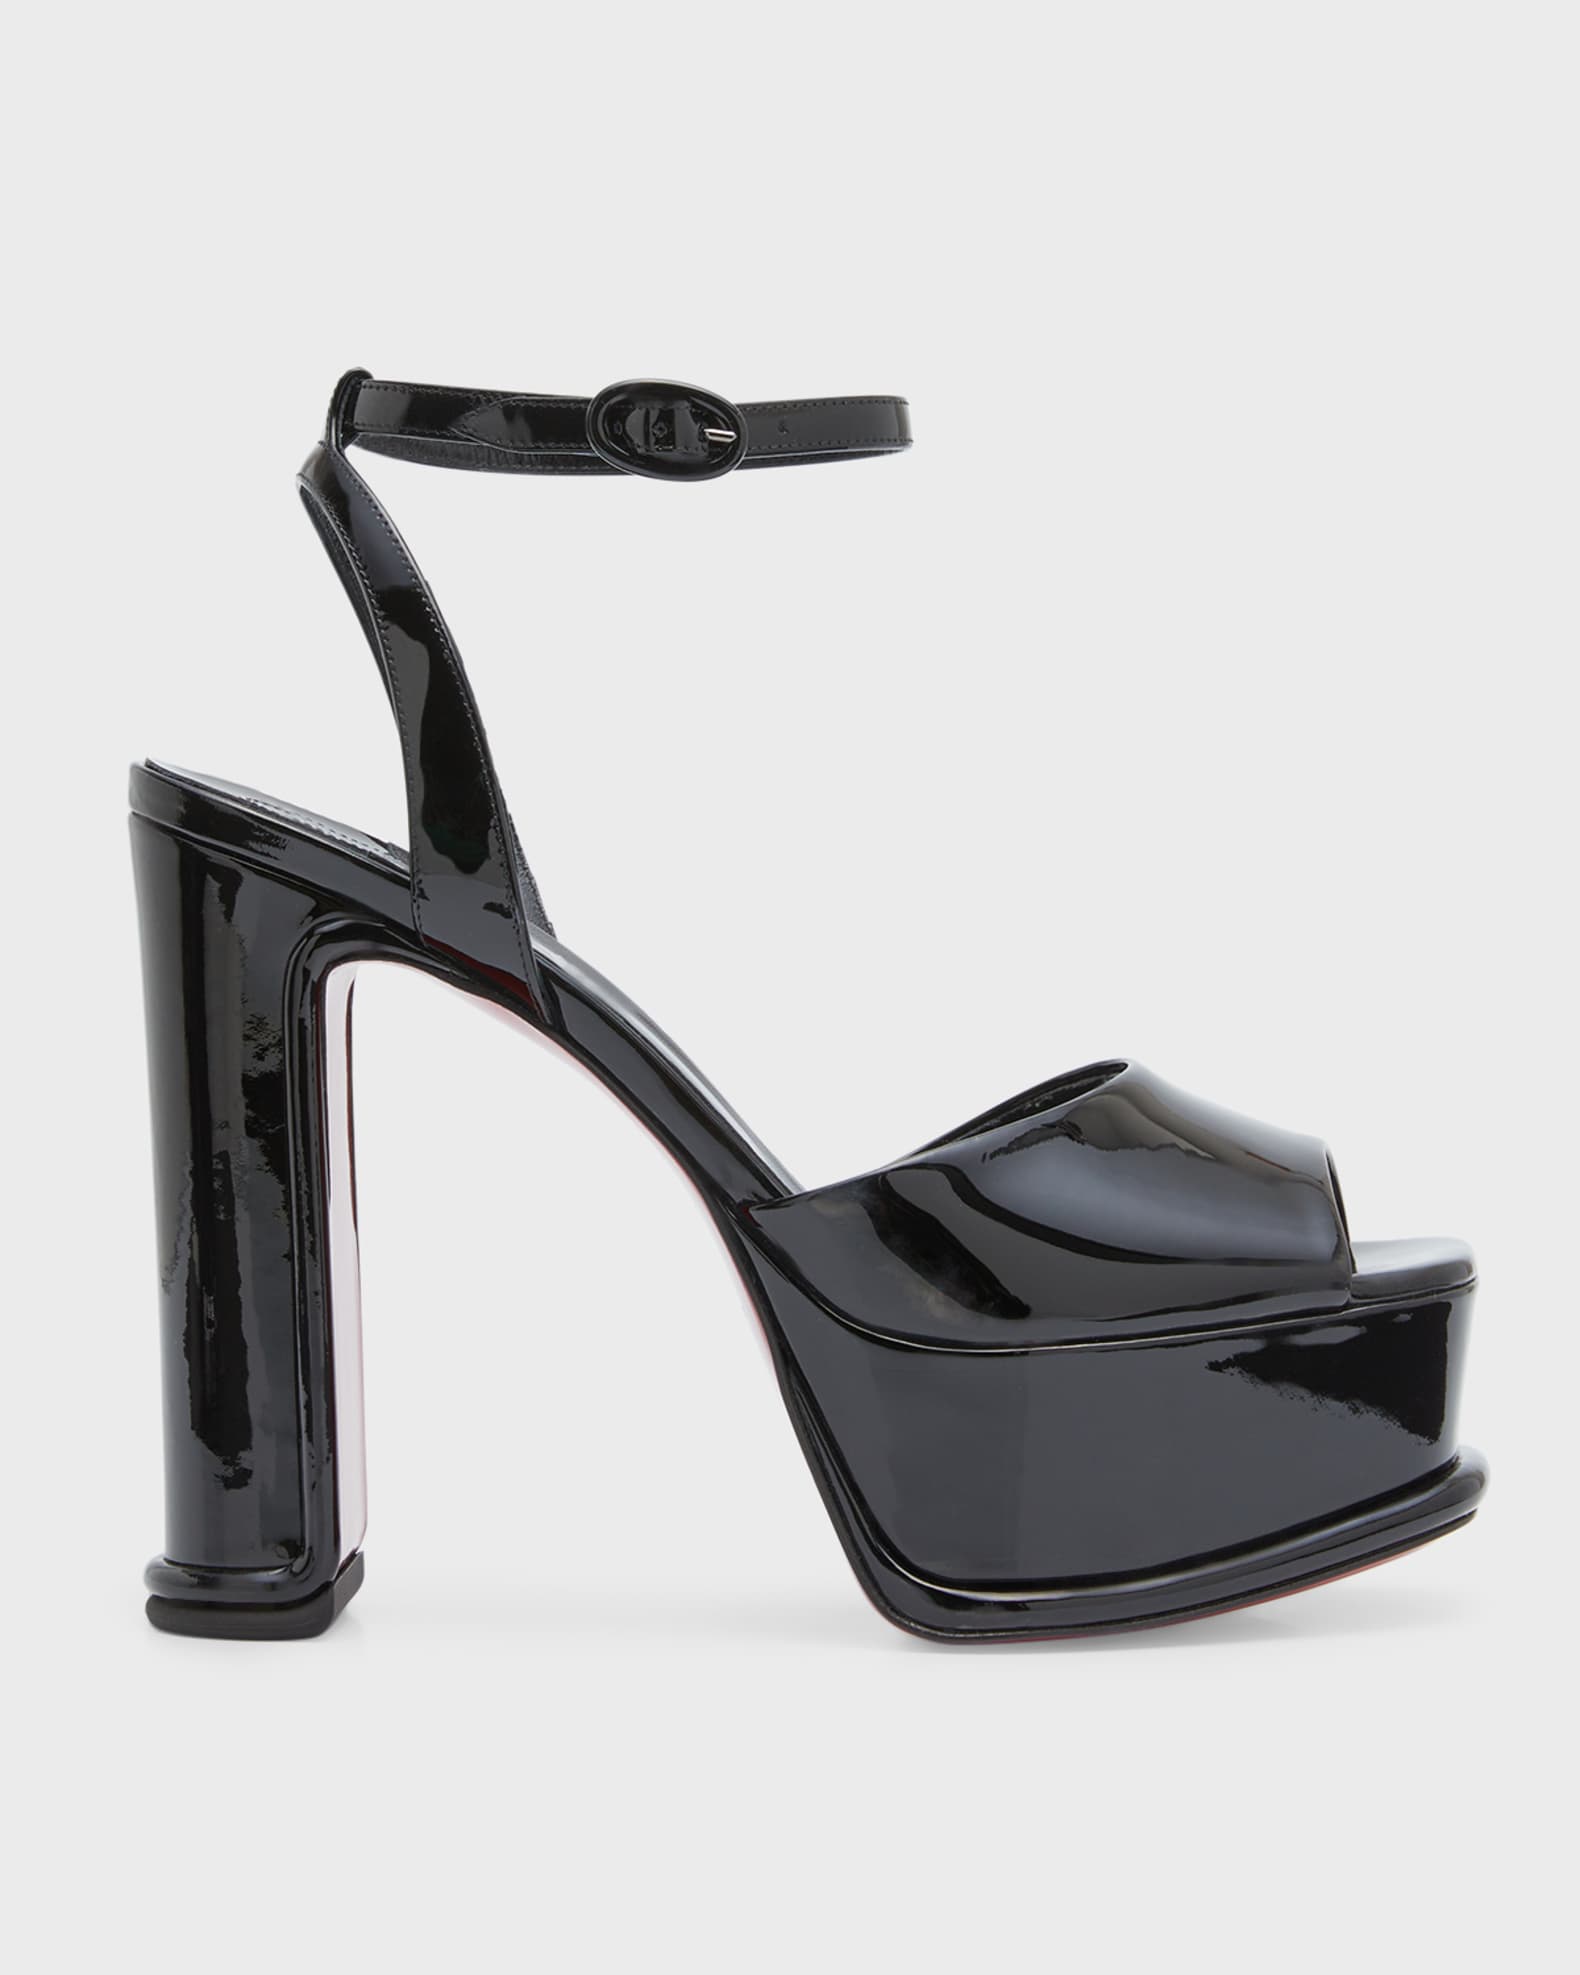 Christian Louboutin Amali Patent Red Sole Platform Sandals | Neiman Marcus